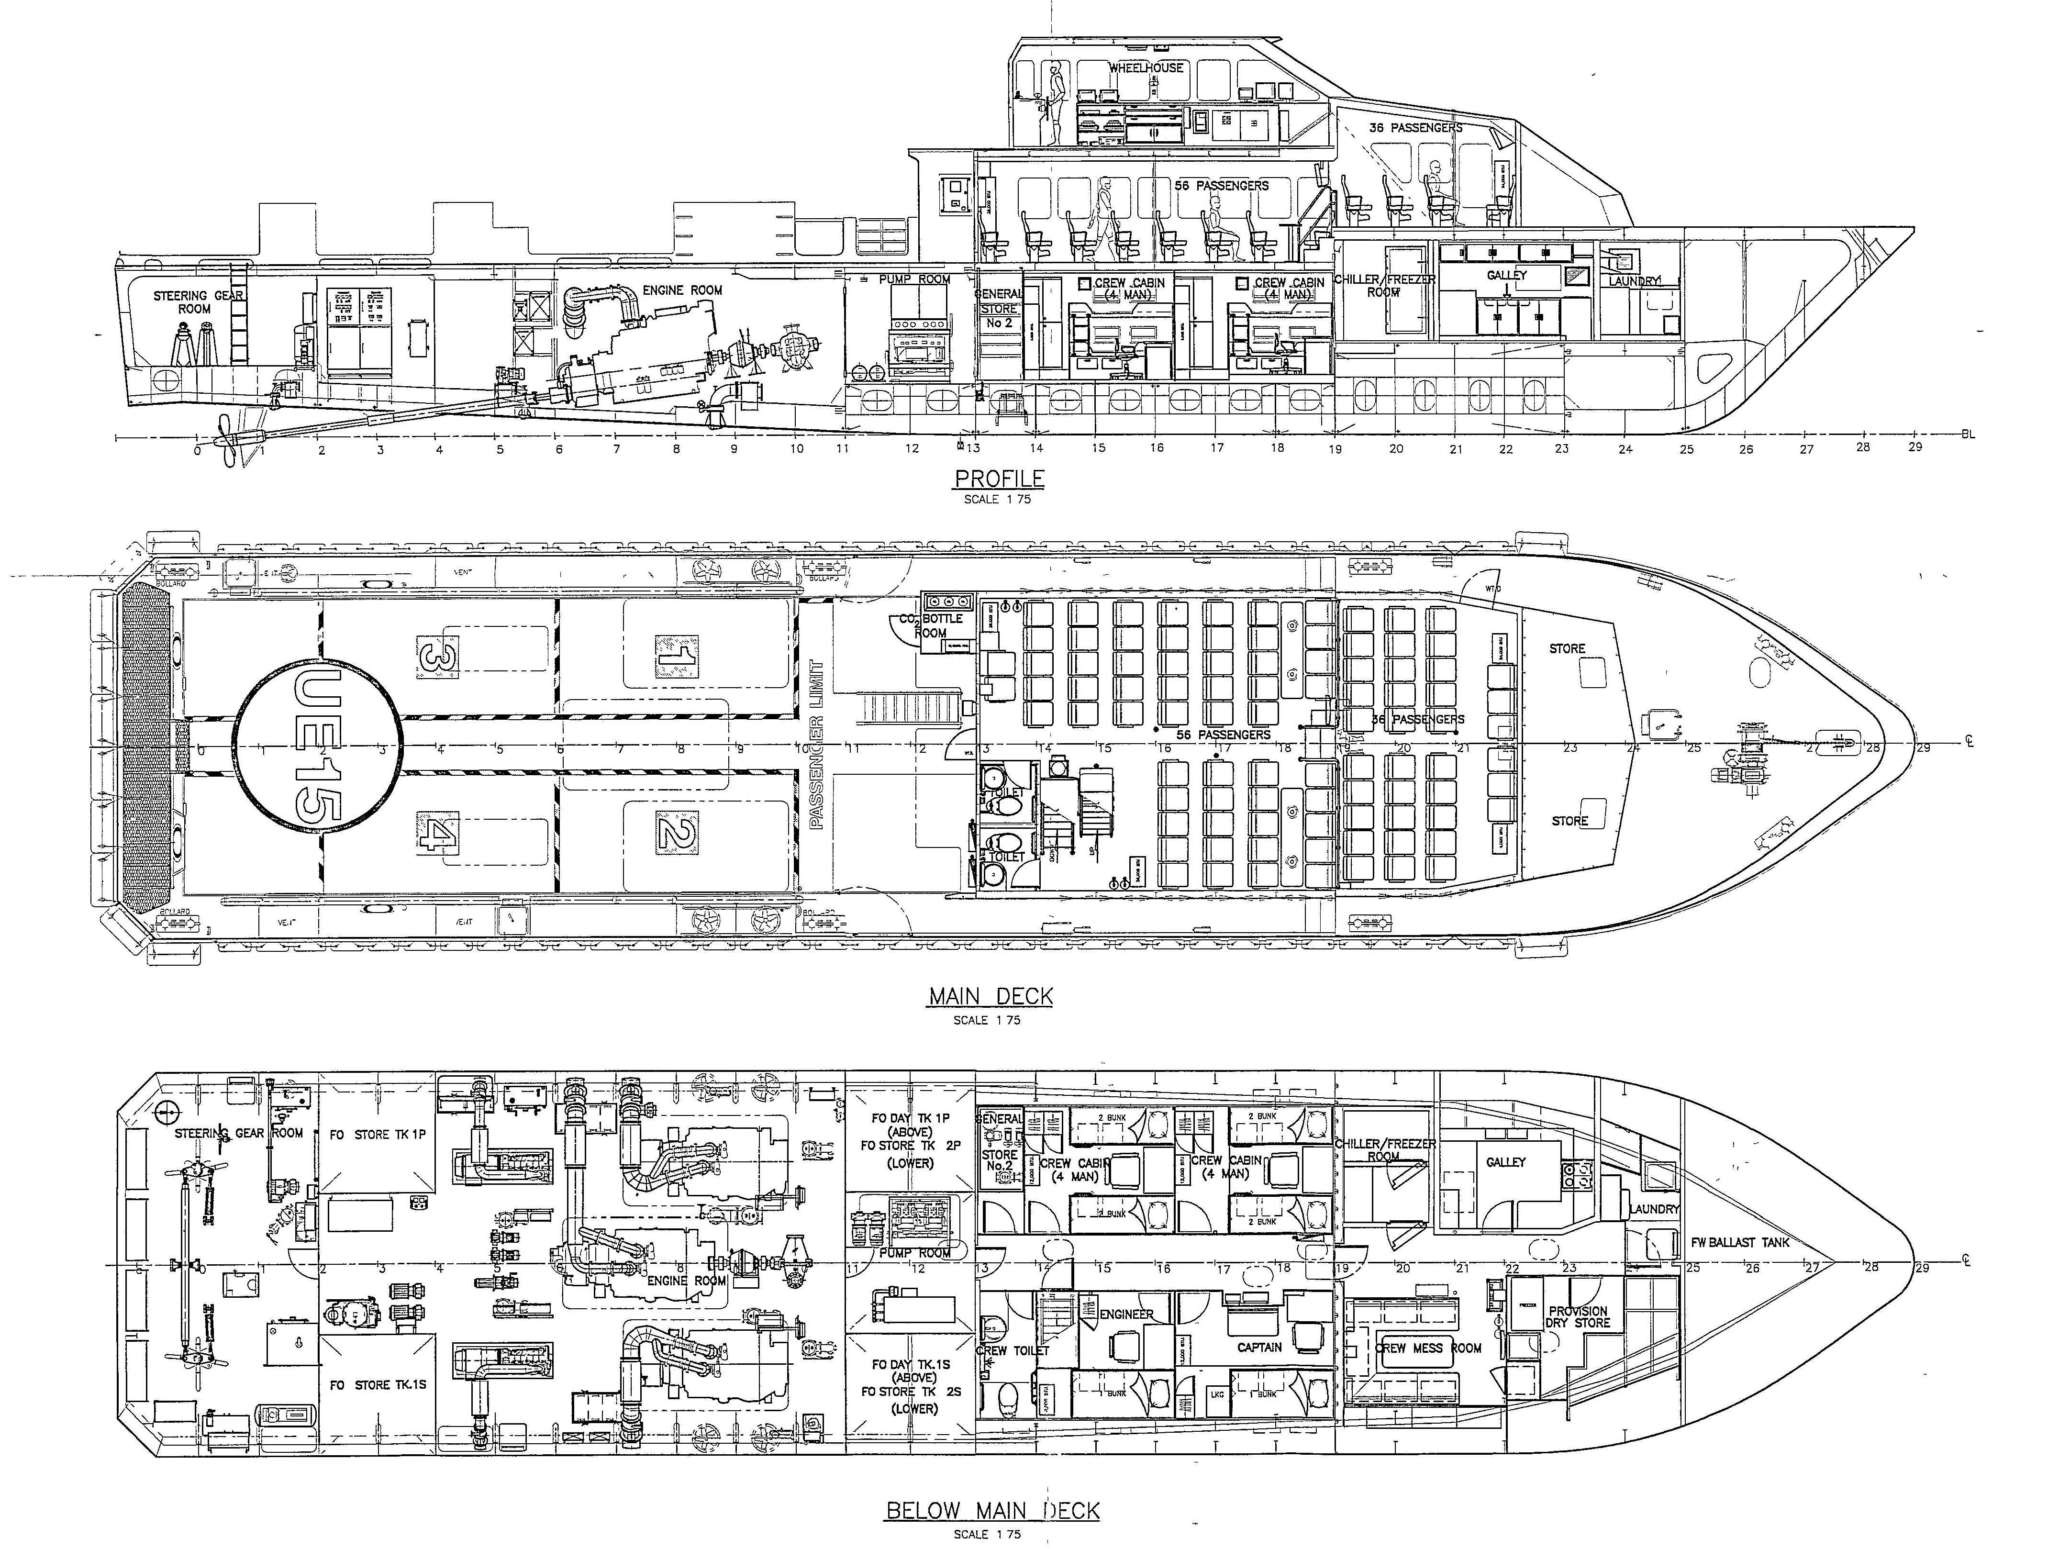 Fast Crewboat / Utility Vessel - Van Loon Maritime Services B.V.